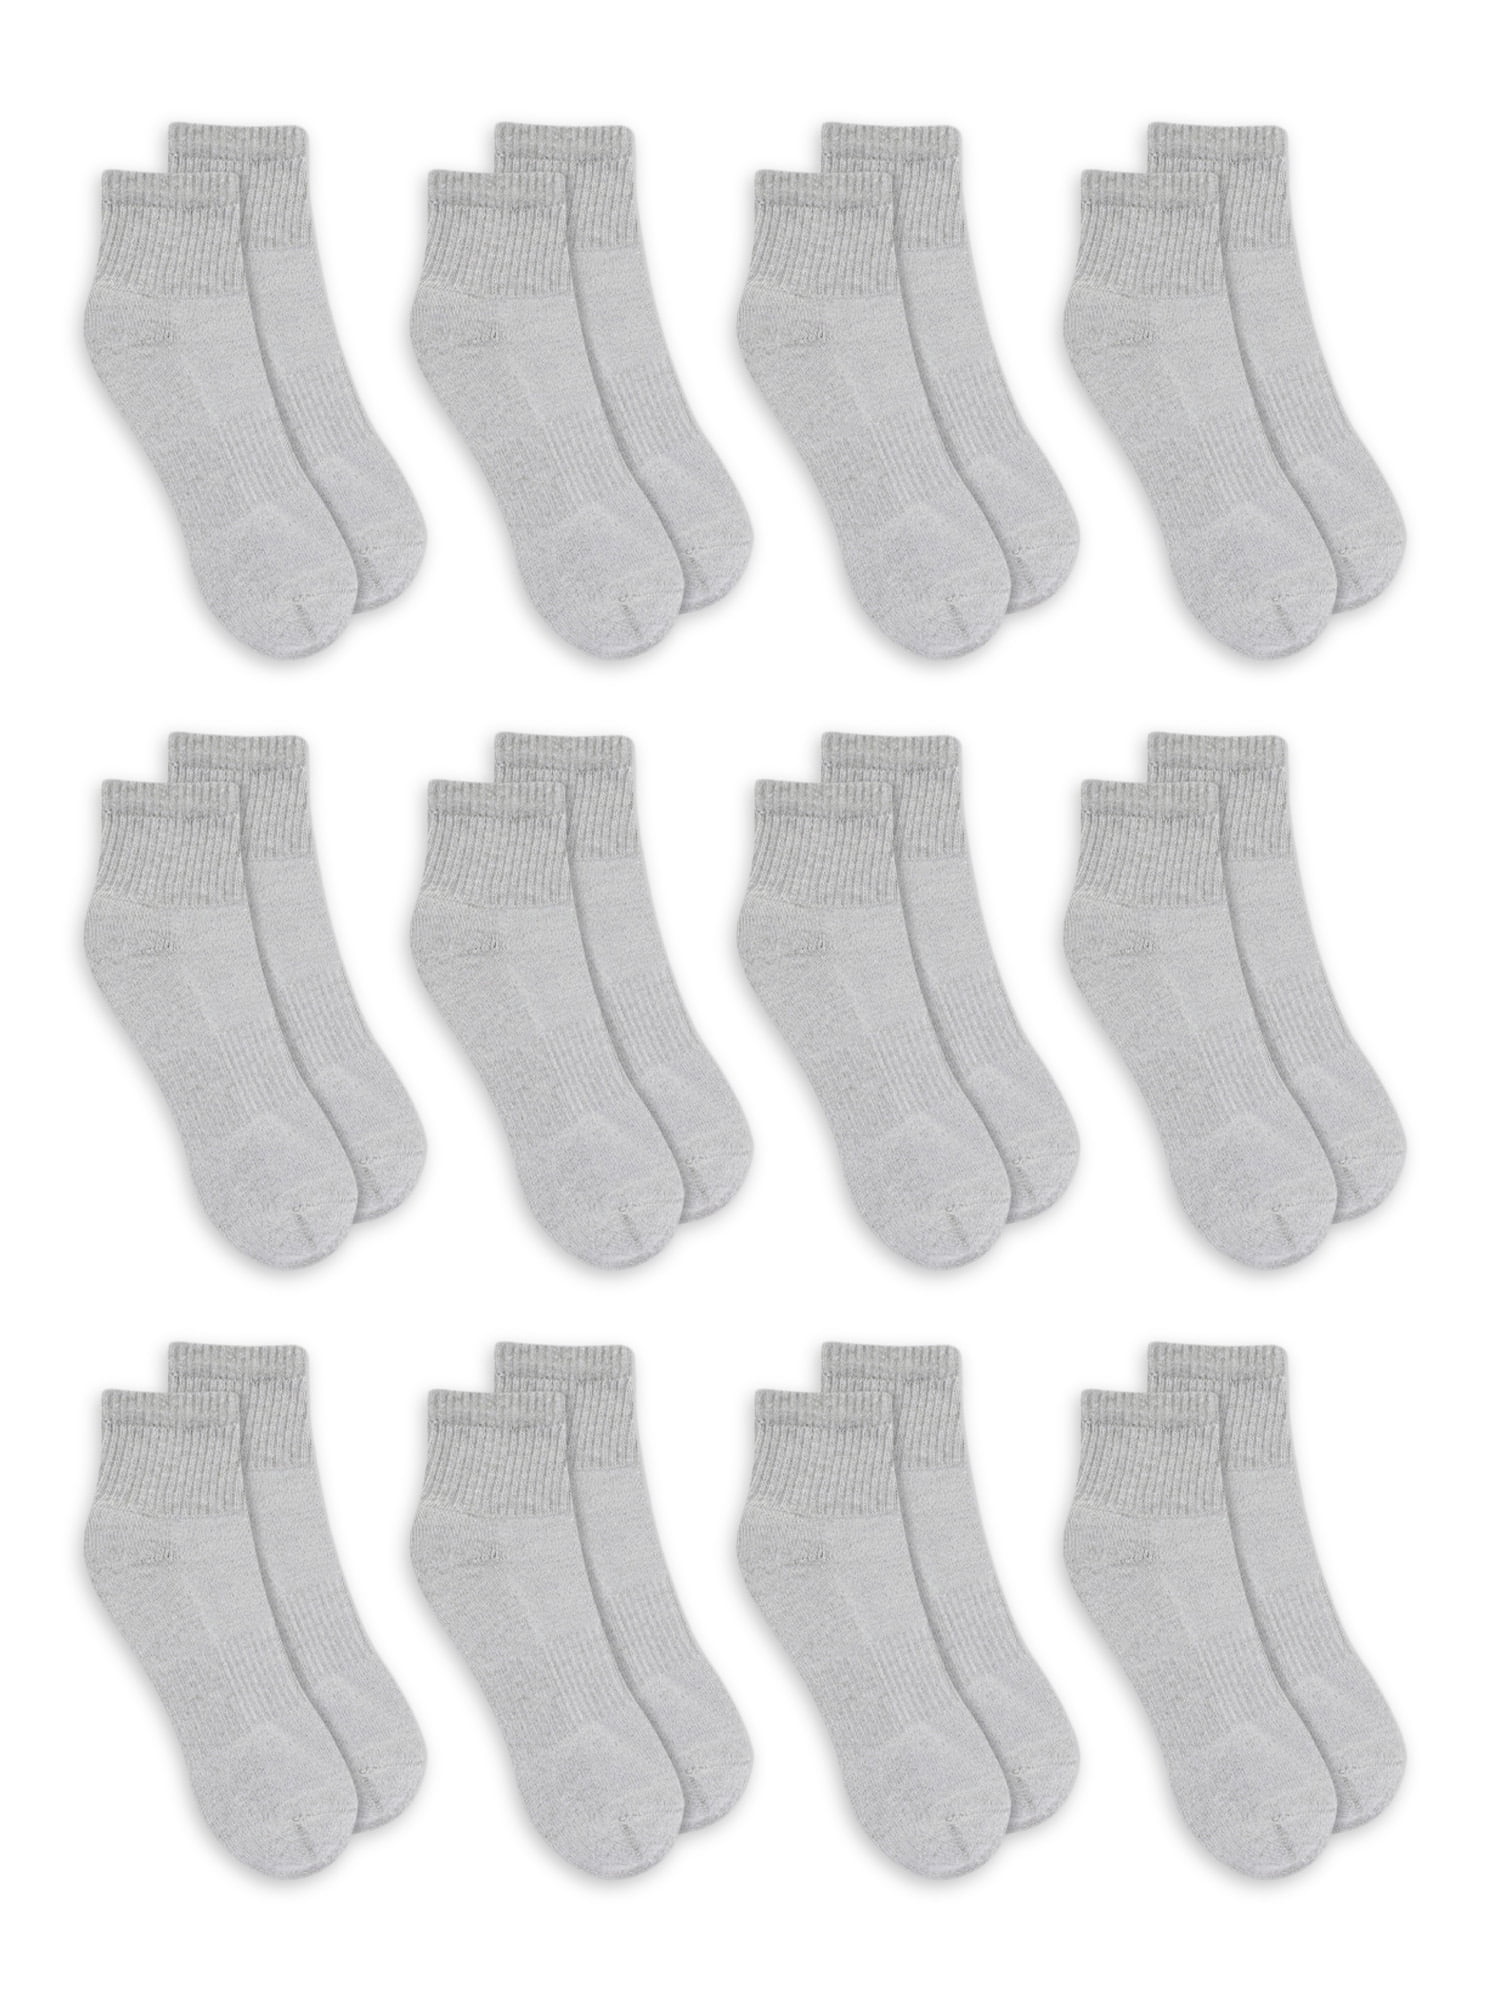 Athletic Works Men's Recycled Ankle Socks 12 Pair Pack - Walmart.com